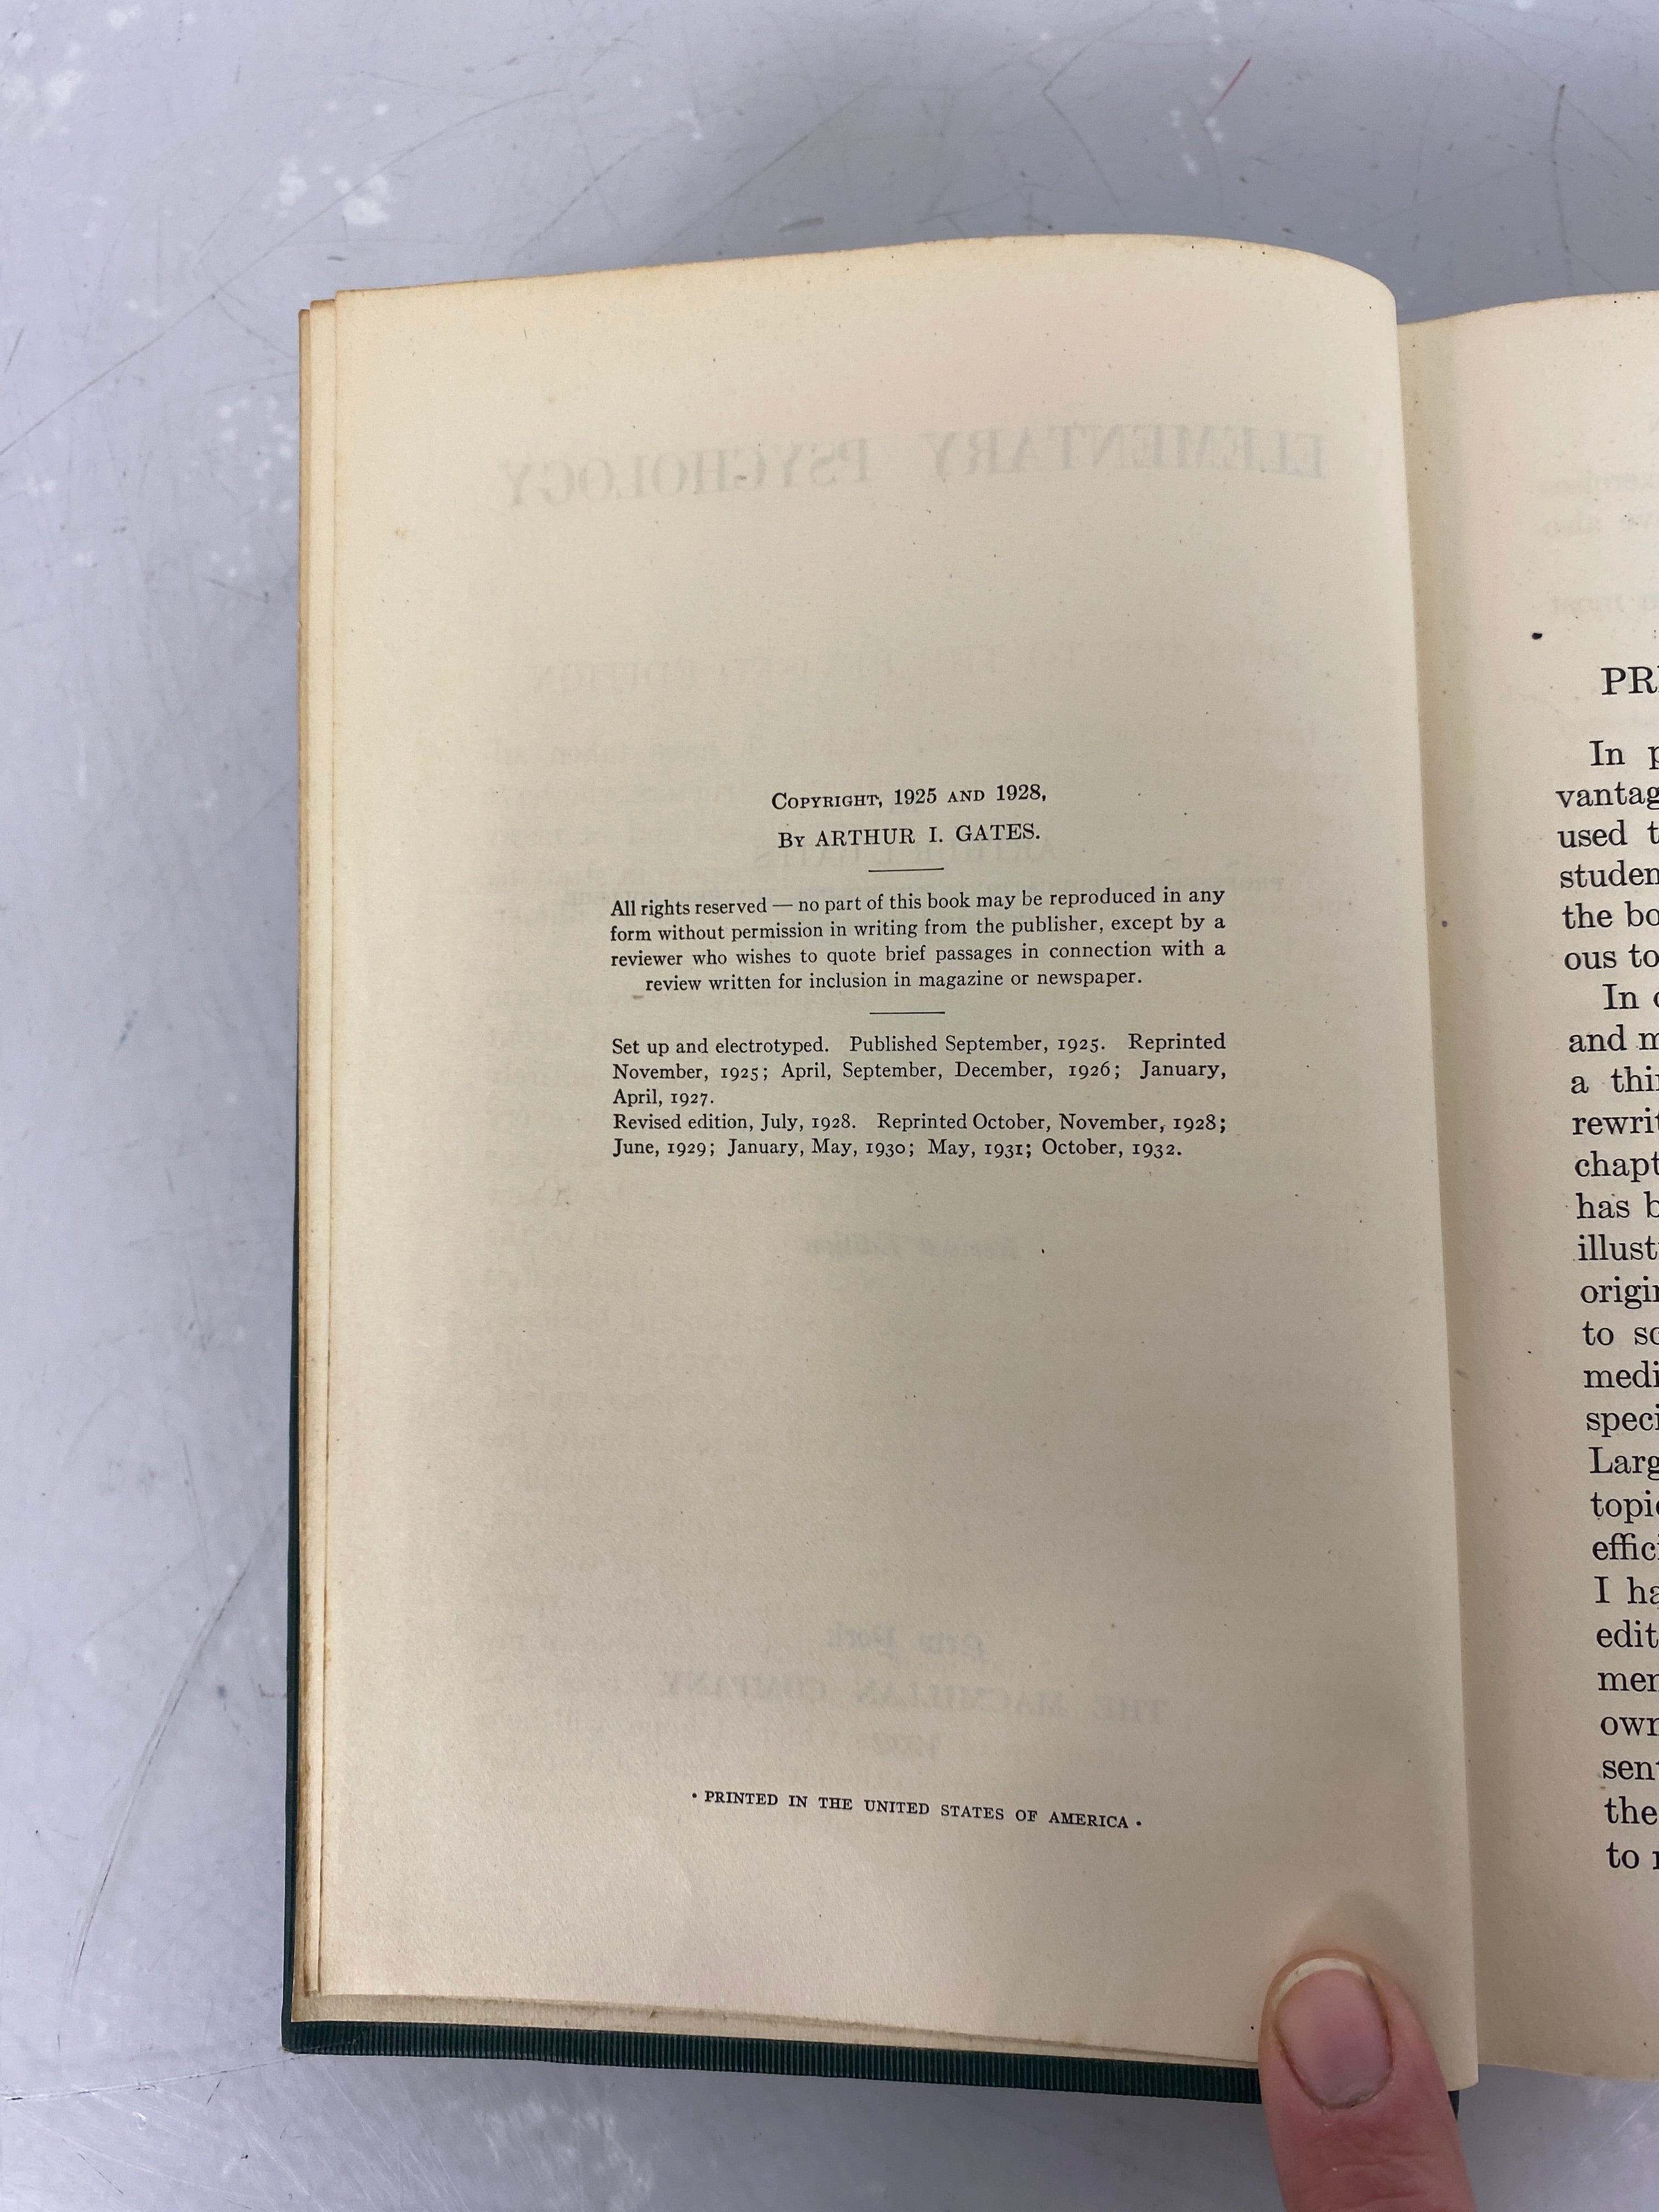 Elementary Psychology by Arthur Gates 1932 Revised Edition HC